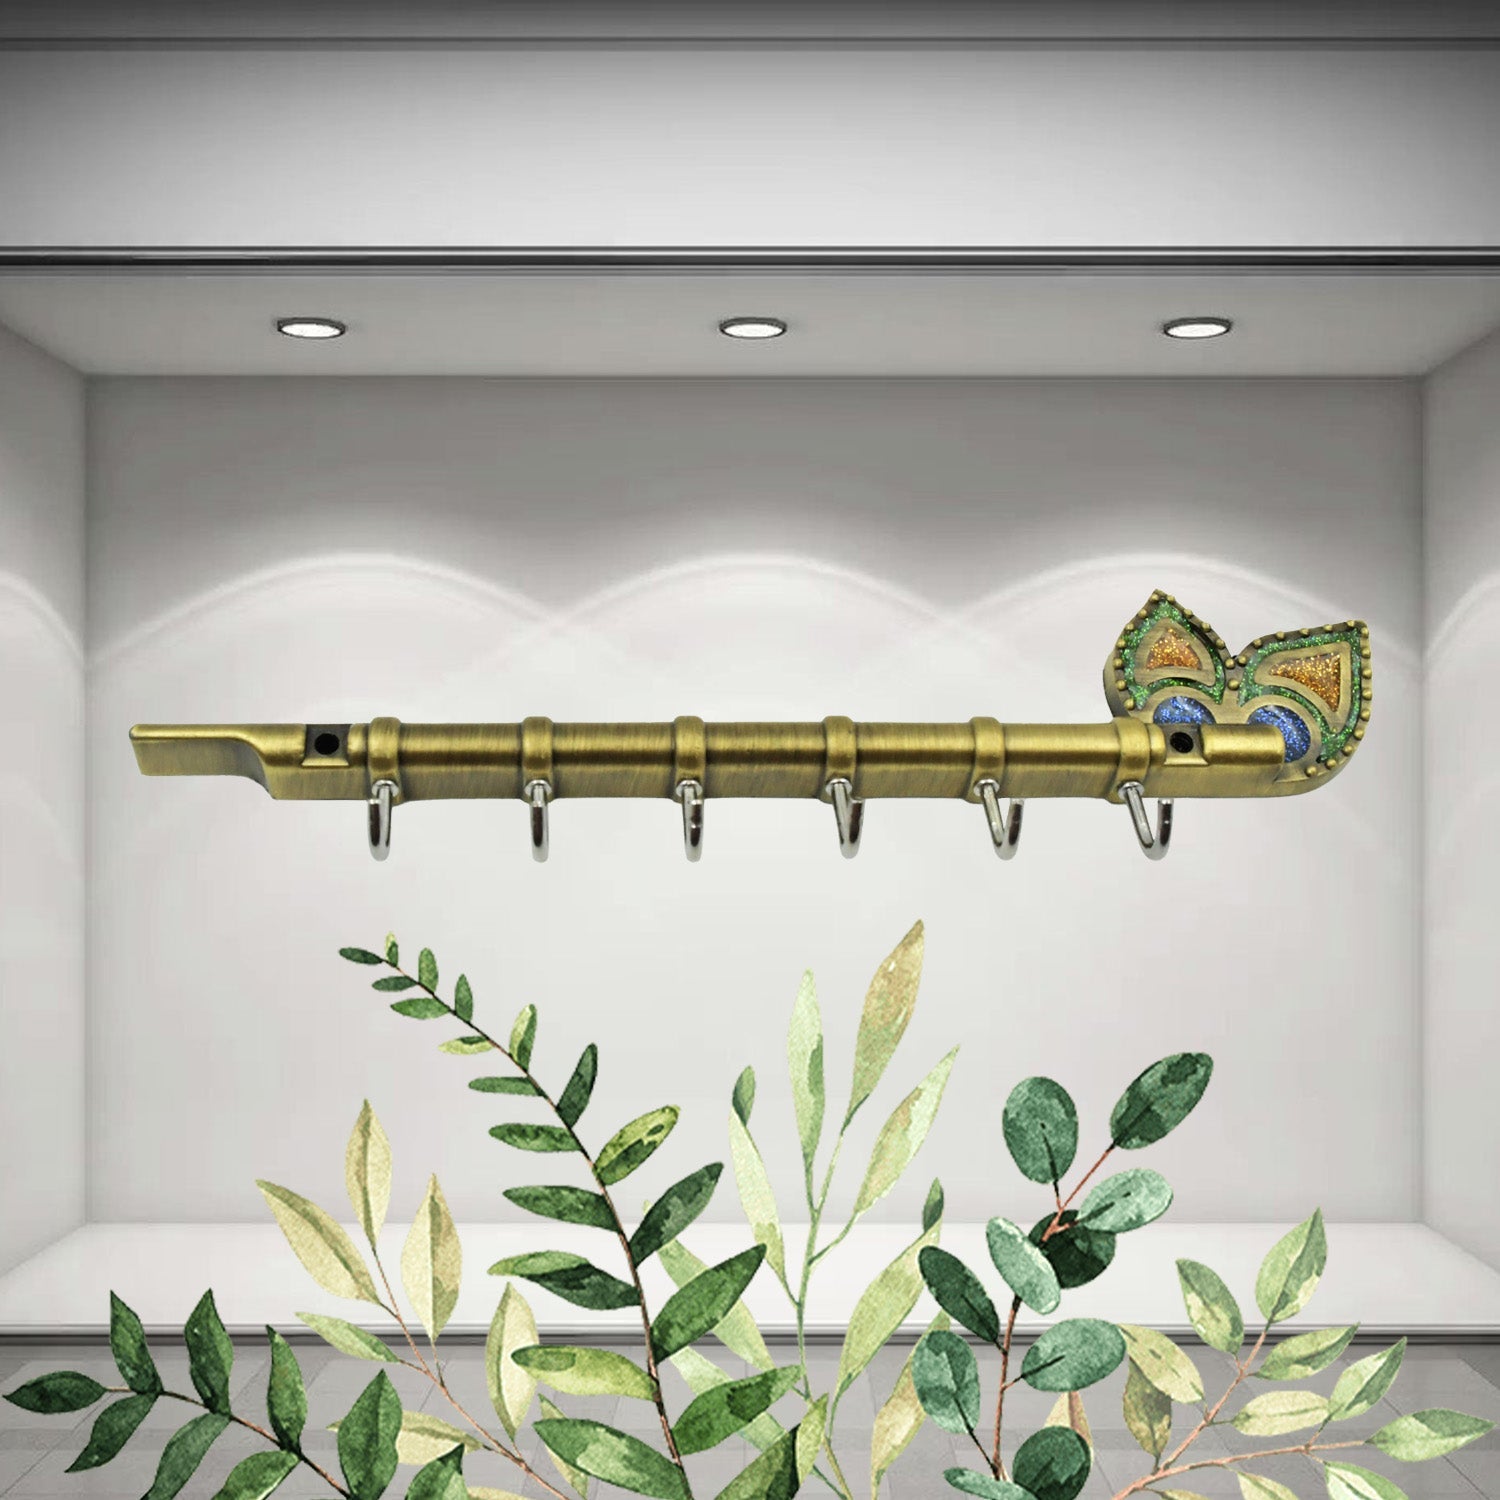 Metal Key Stand / Hanger / Holder for Home & Office Brass Key Hook / Holder Door Hooks Rail for Hanging Keys, Clothes, Towel Hook (1 Pc / Veena & Gun Shape, Lord Krishna's Flute and Peacock Quills Key Holder )